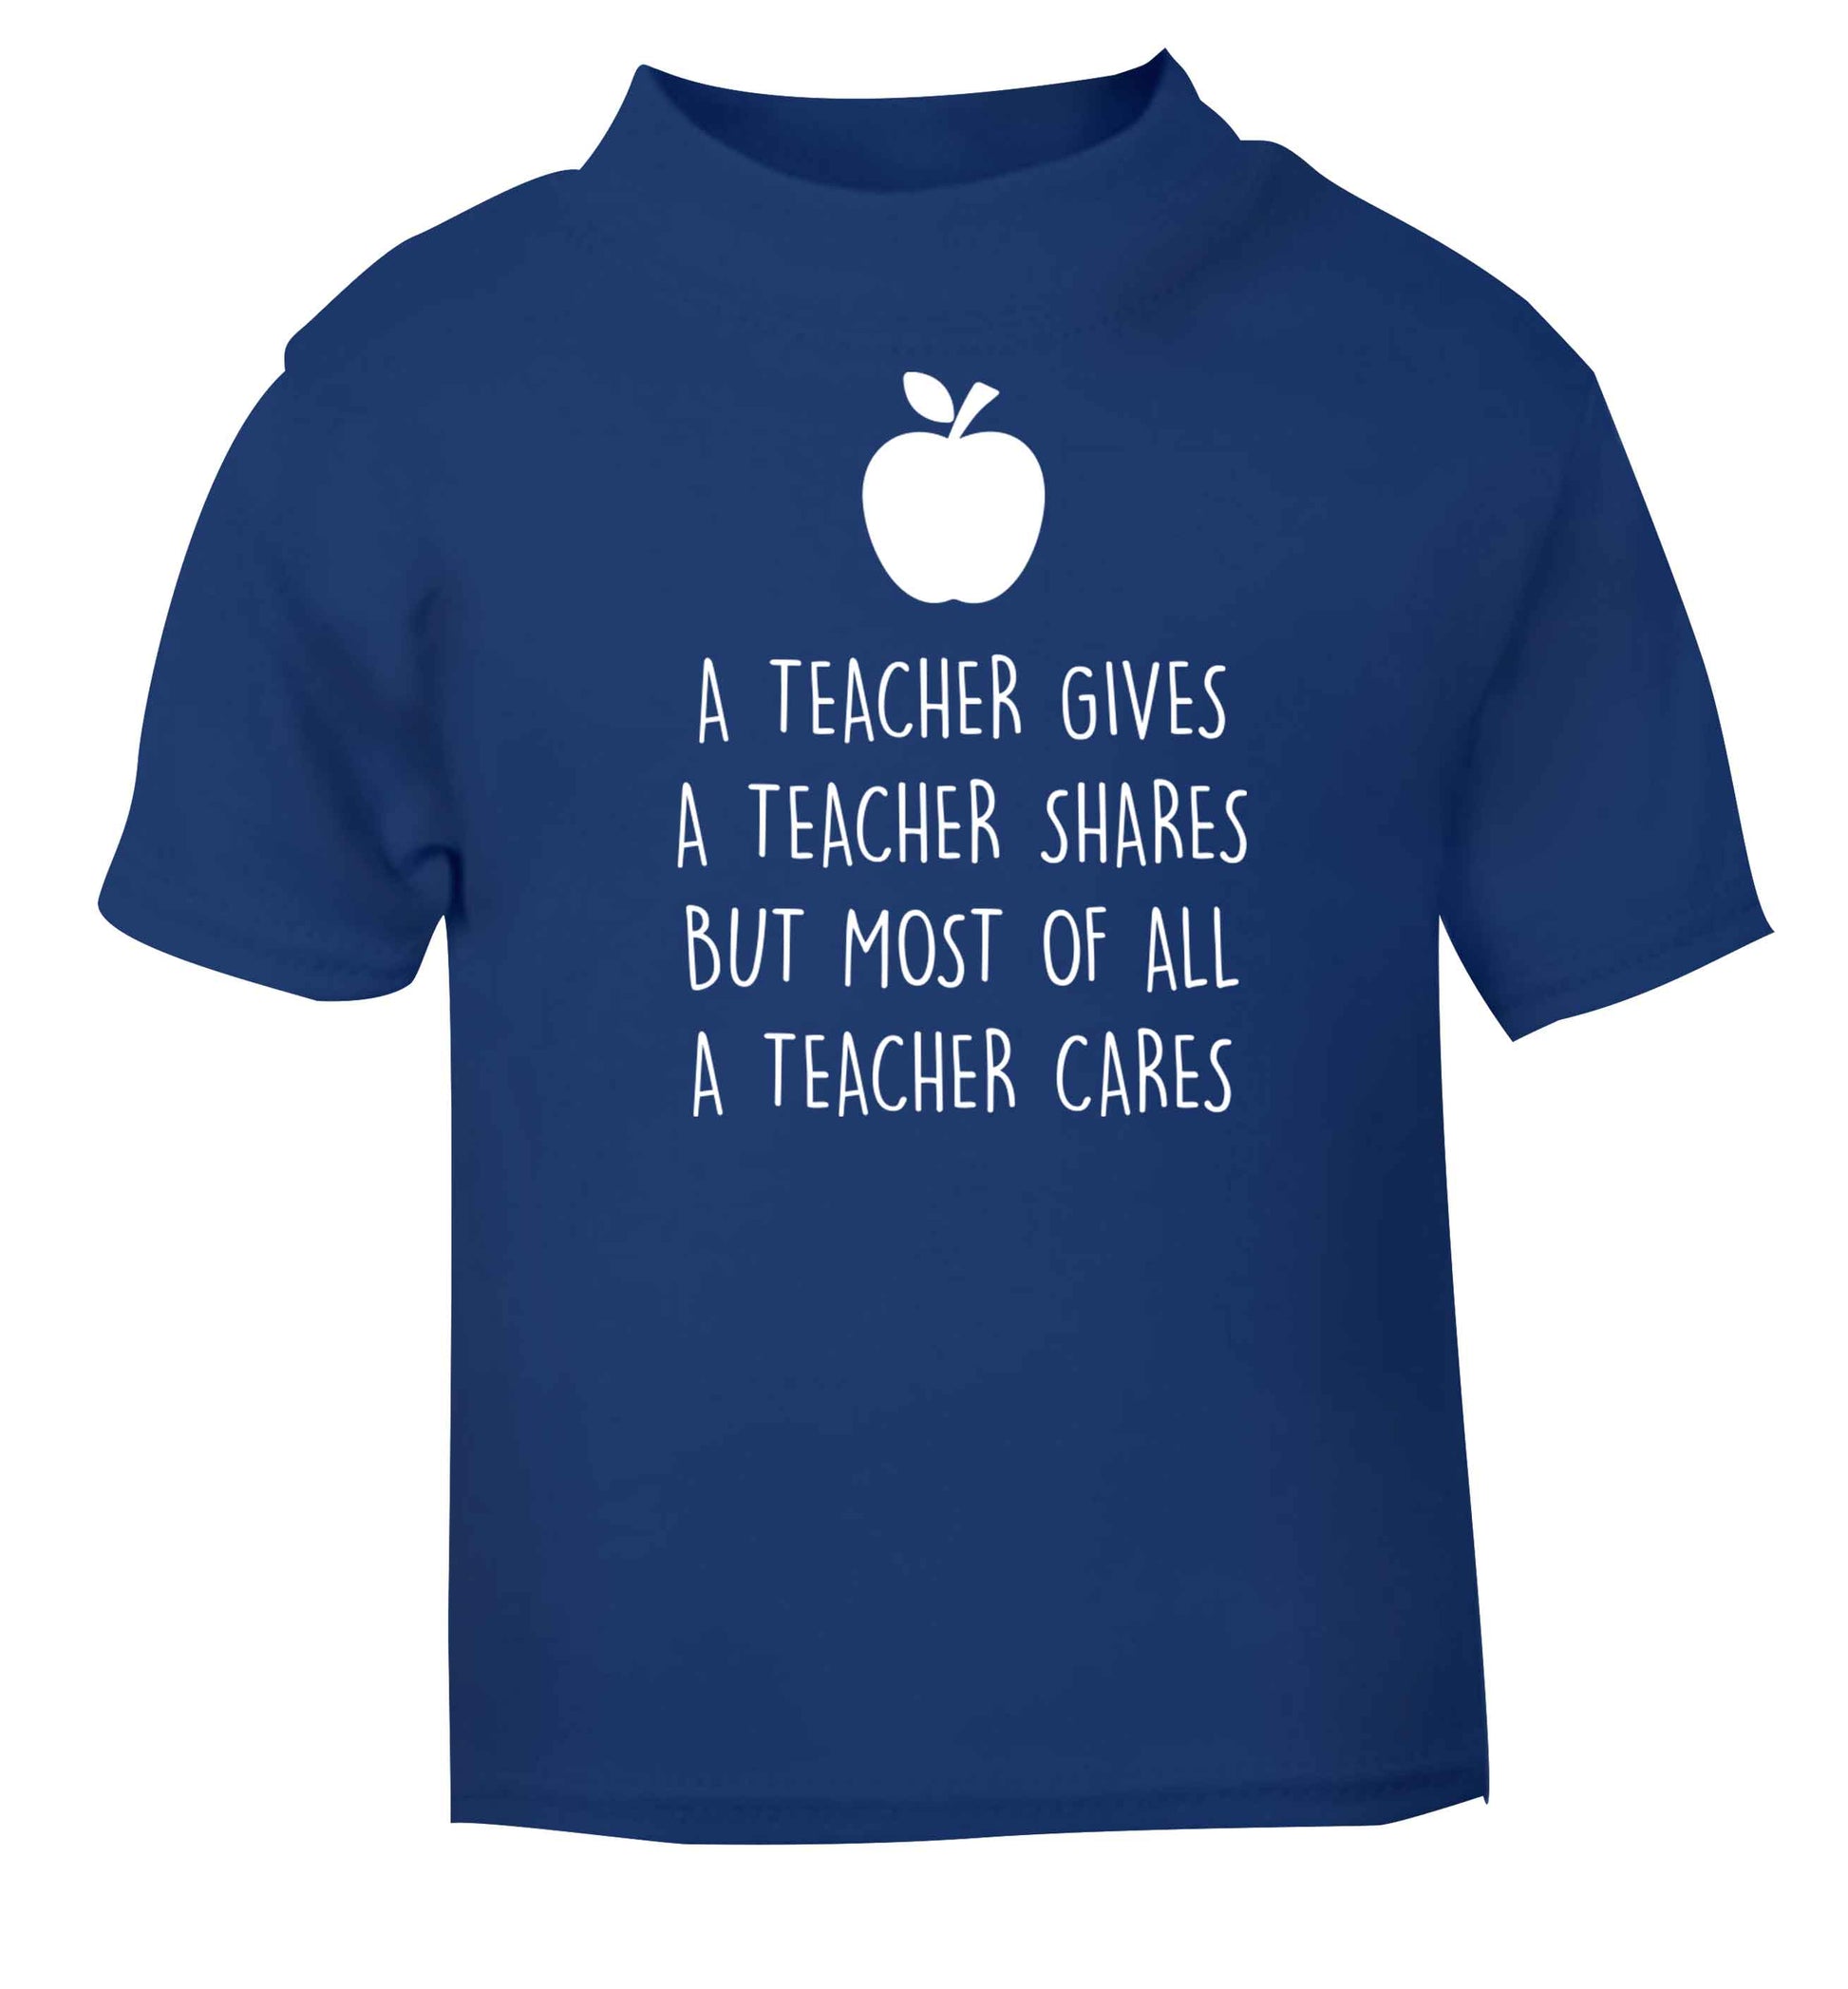 A teacher gives a teacher shares but most of all a teacher cares blue baby toddler Tshirt 2 Years